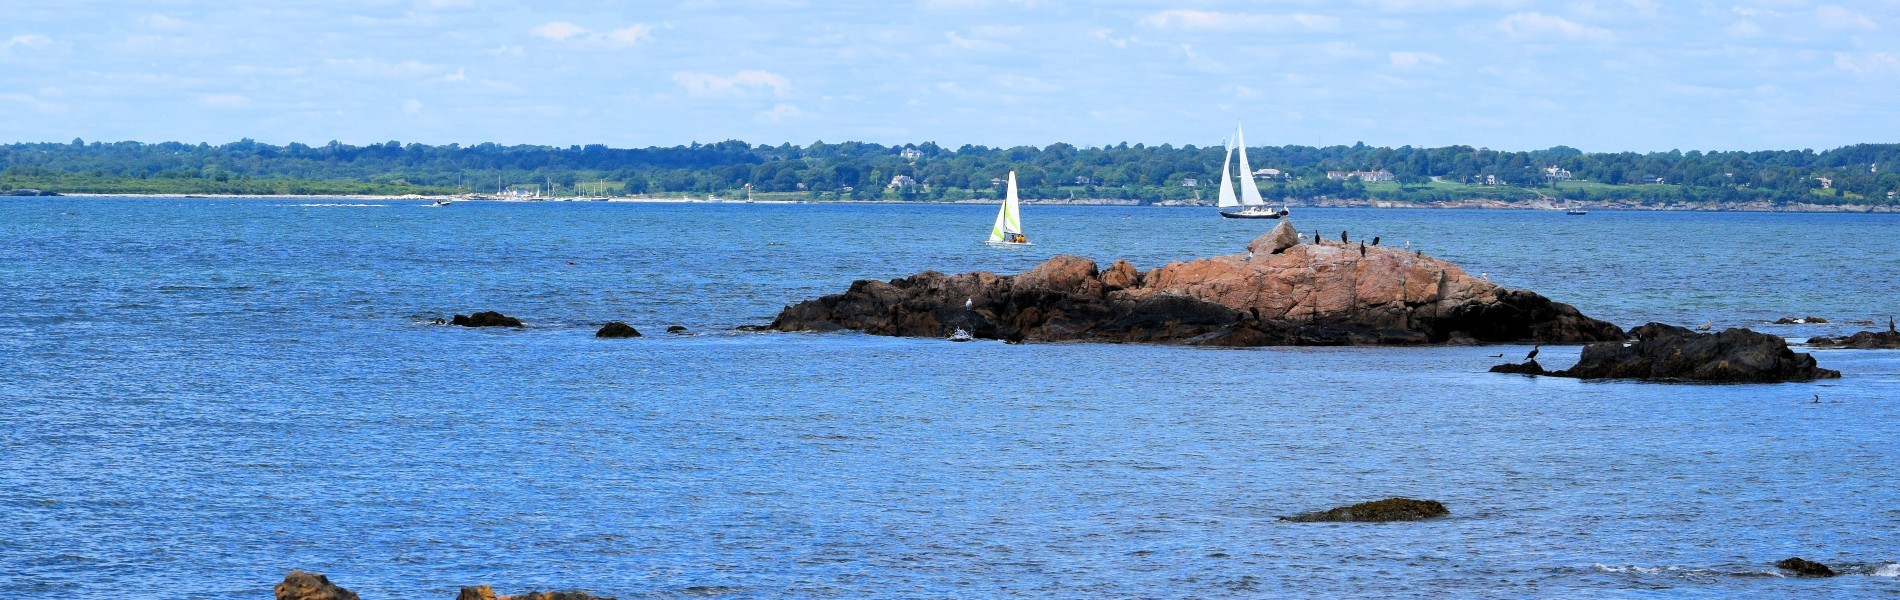 View of Ocean near Indian Avenue in Portsmouth, Rhode Island